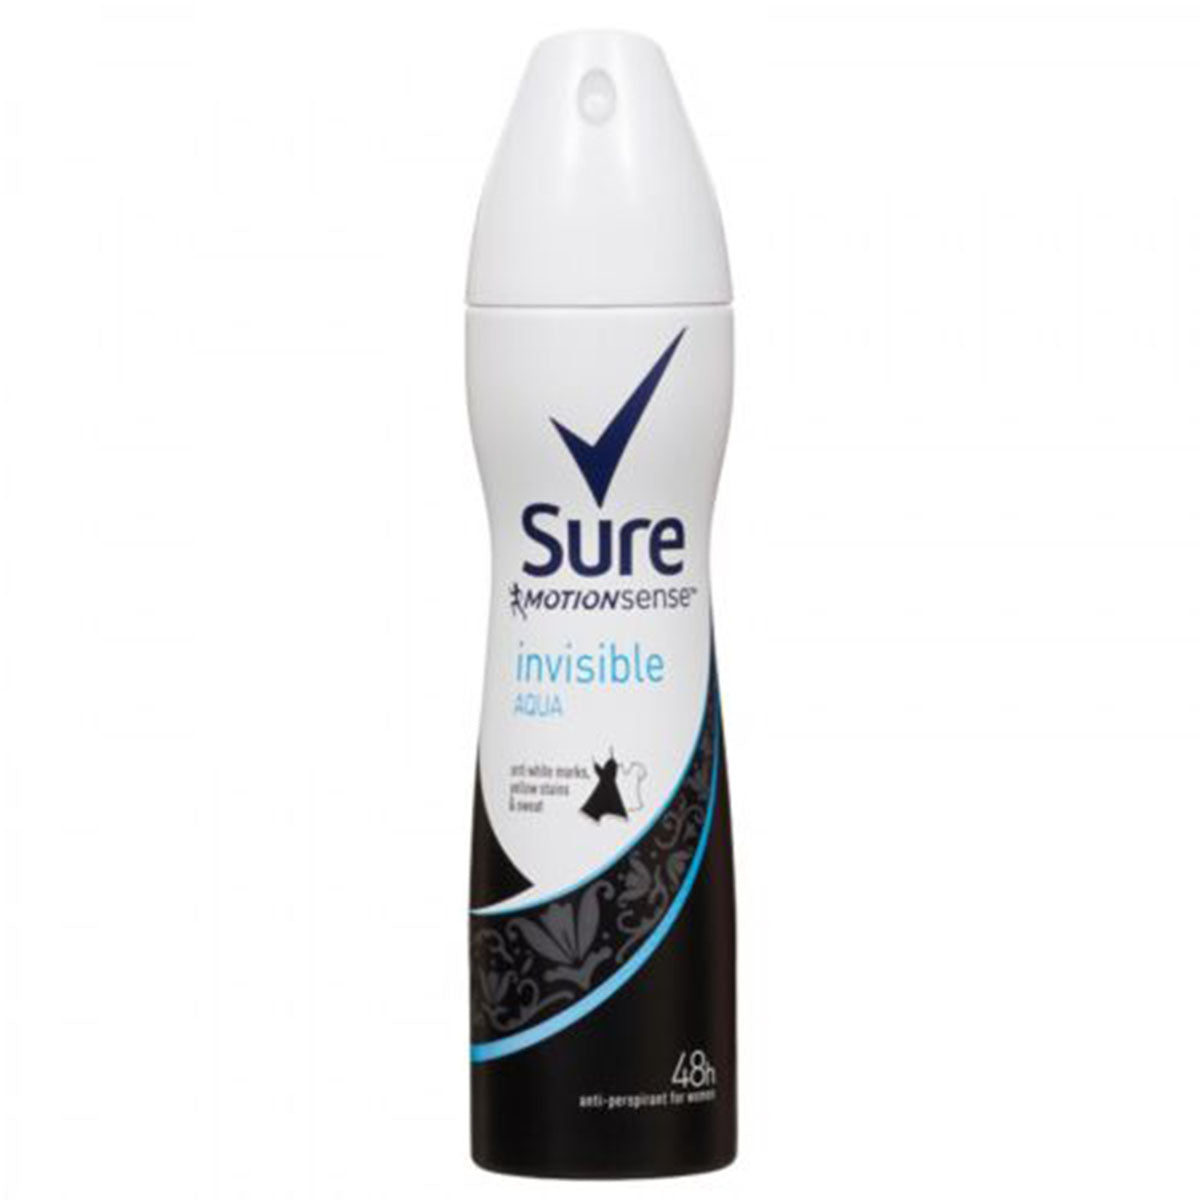 Sure - Invisible Aqua Anti-perspirant Deodorant Aerosol - 150ml - Continental Food Store